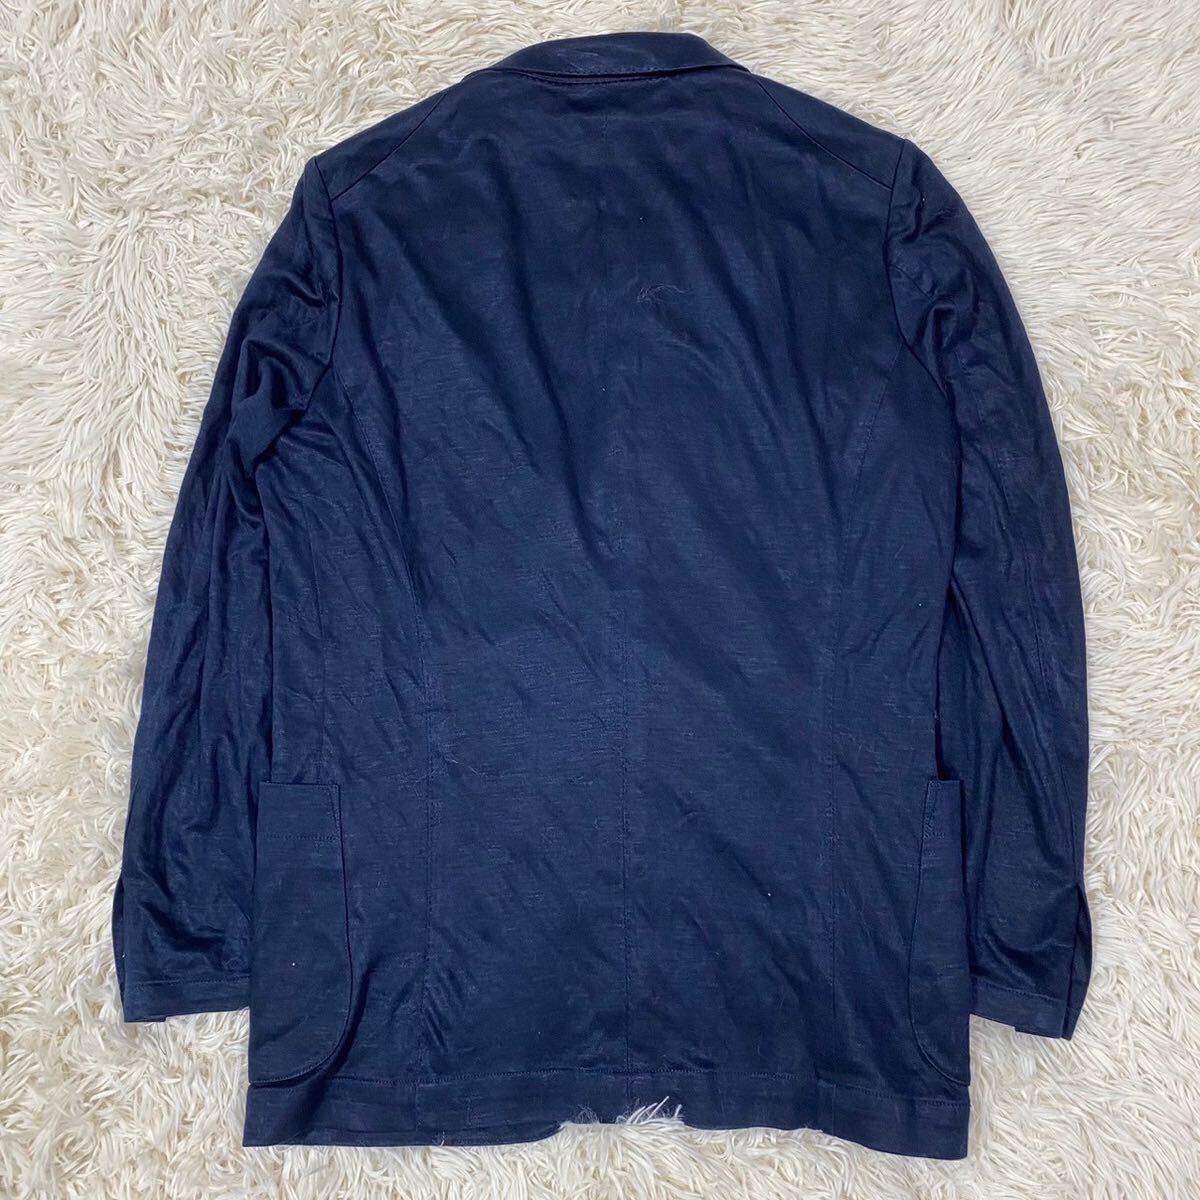  Paul Smith коллекция linen100% L размер tailored jacket ракушка кнопка темно-синий трубчатая обводка лен ..2B PaulSmith collection